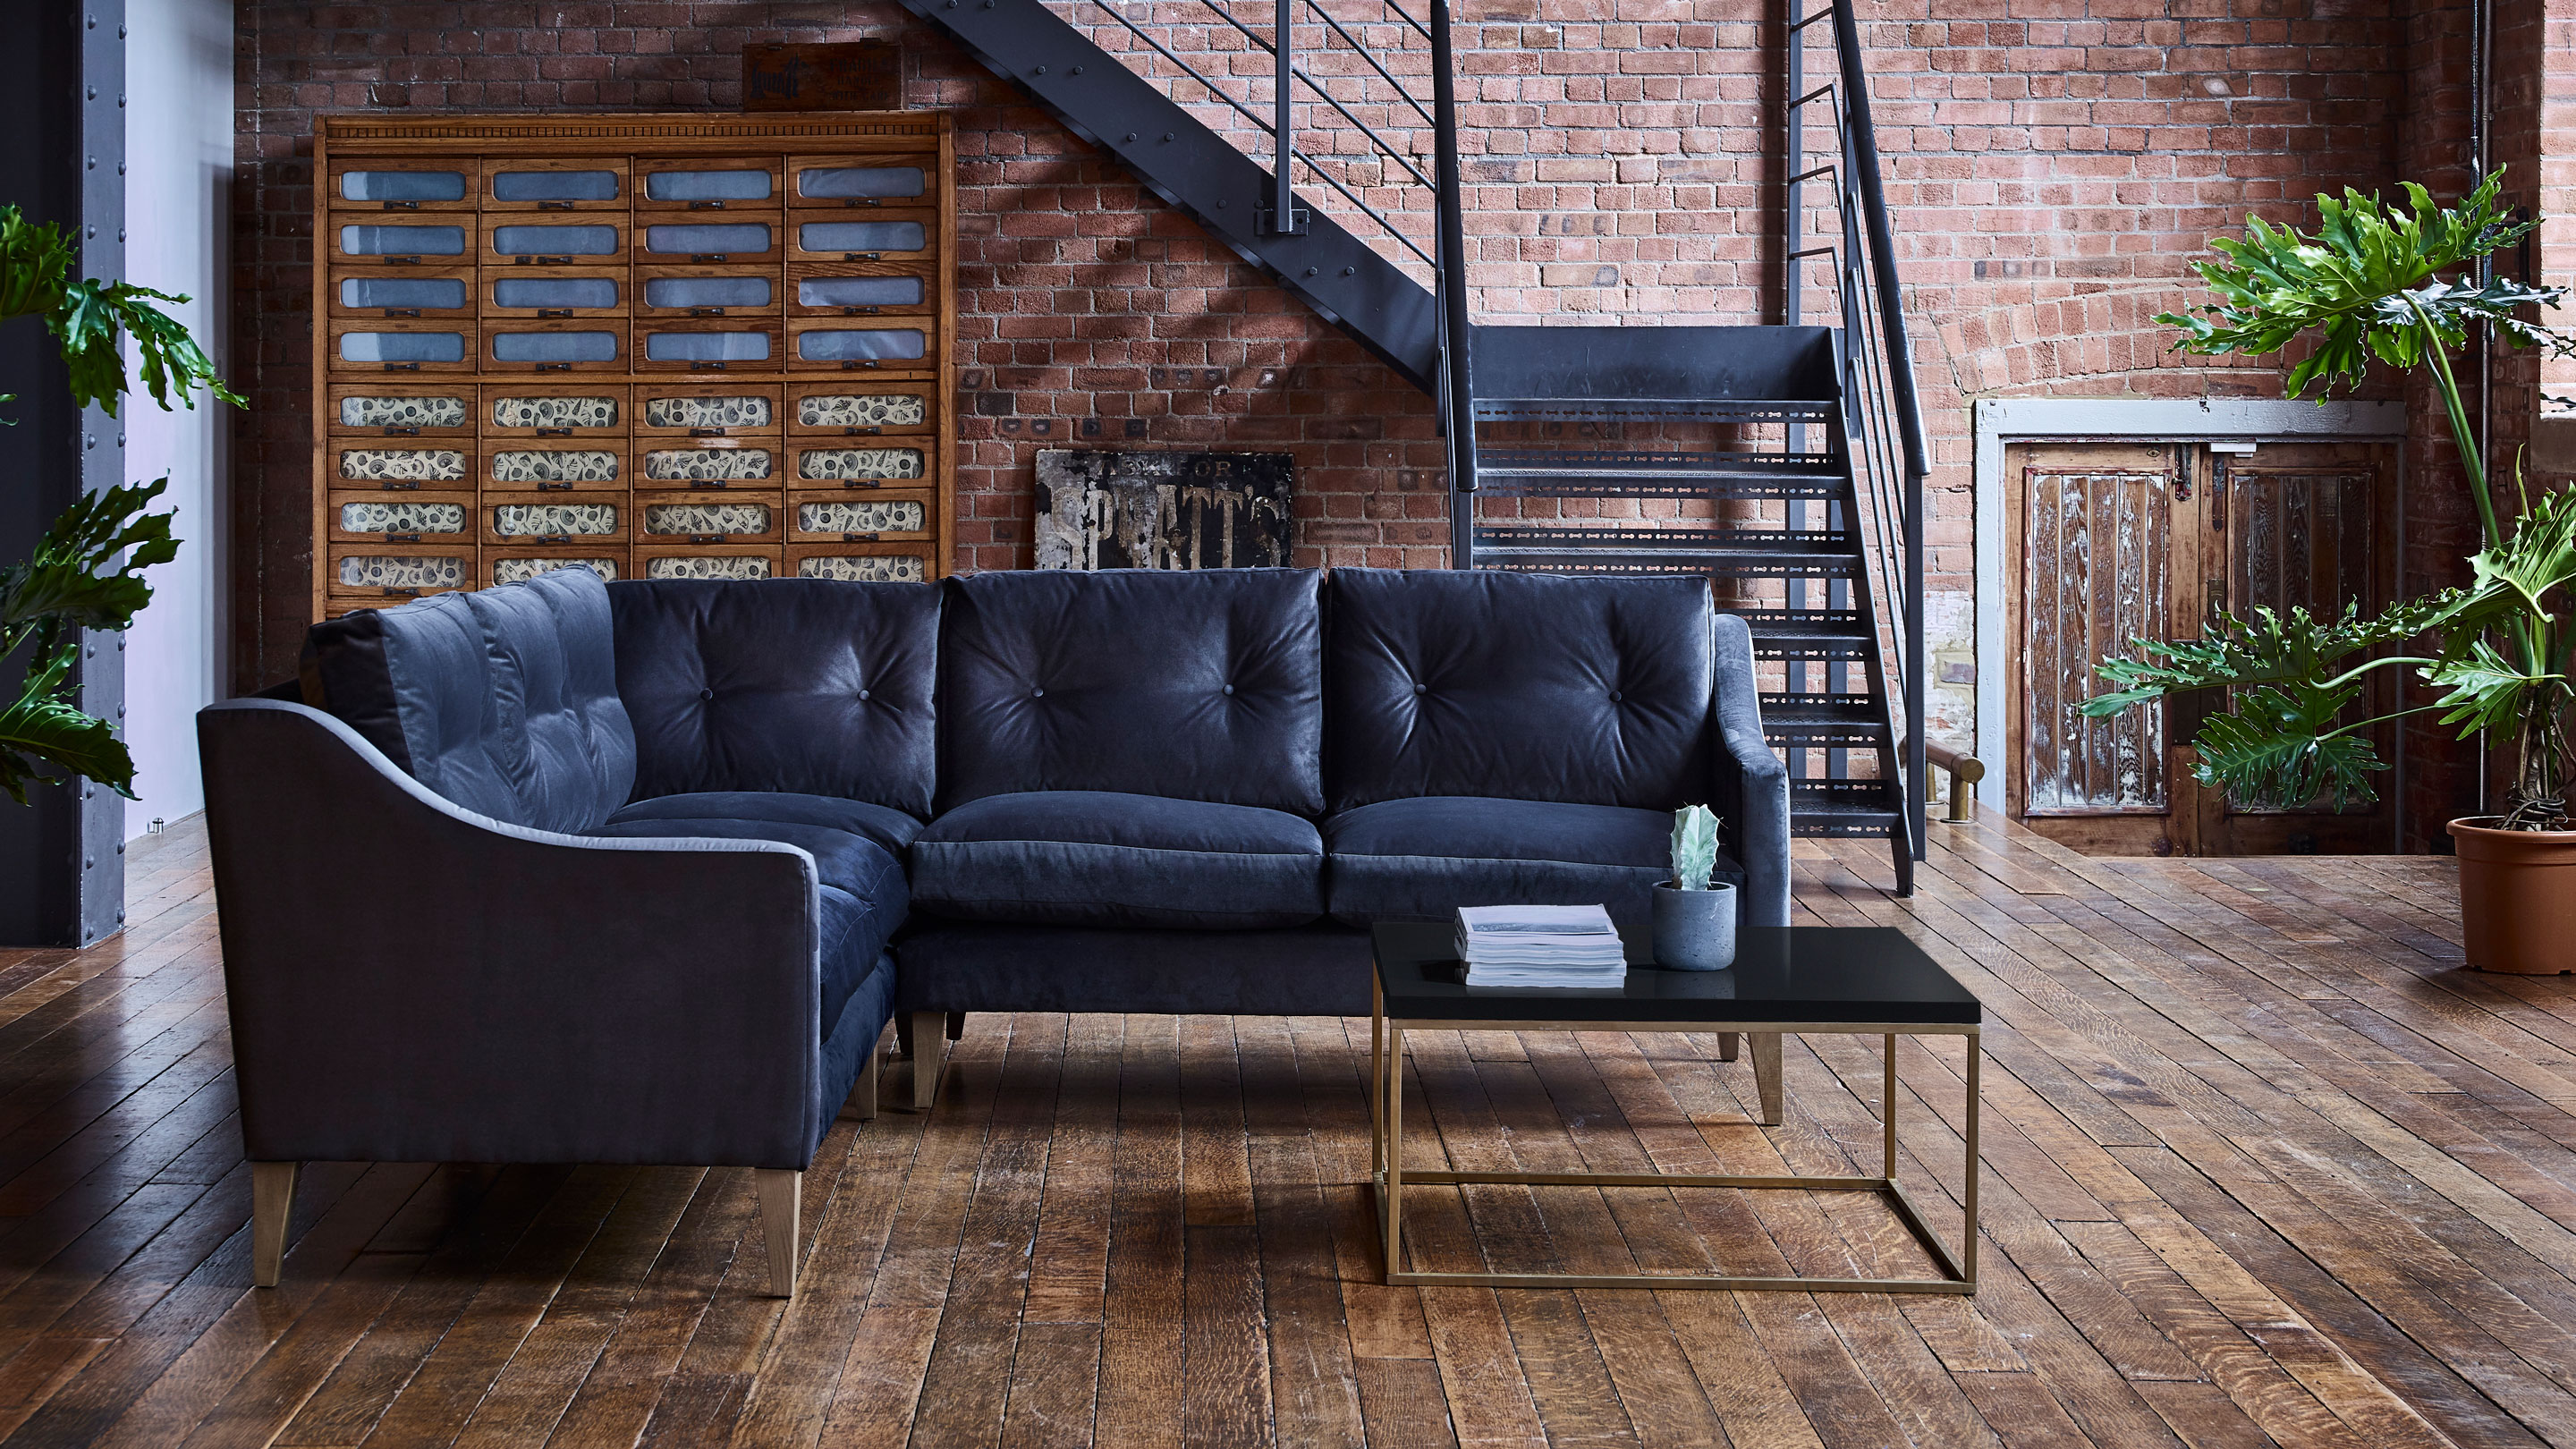 Living Room Furniture For Dark Wood, Couch On Hardwood Floor